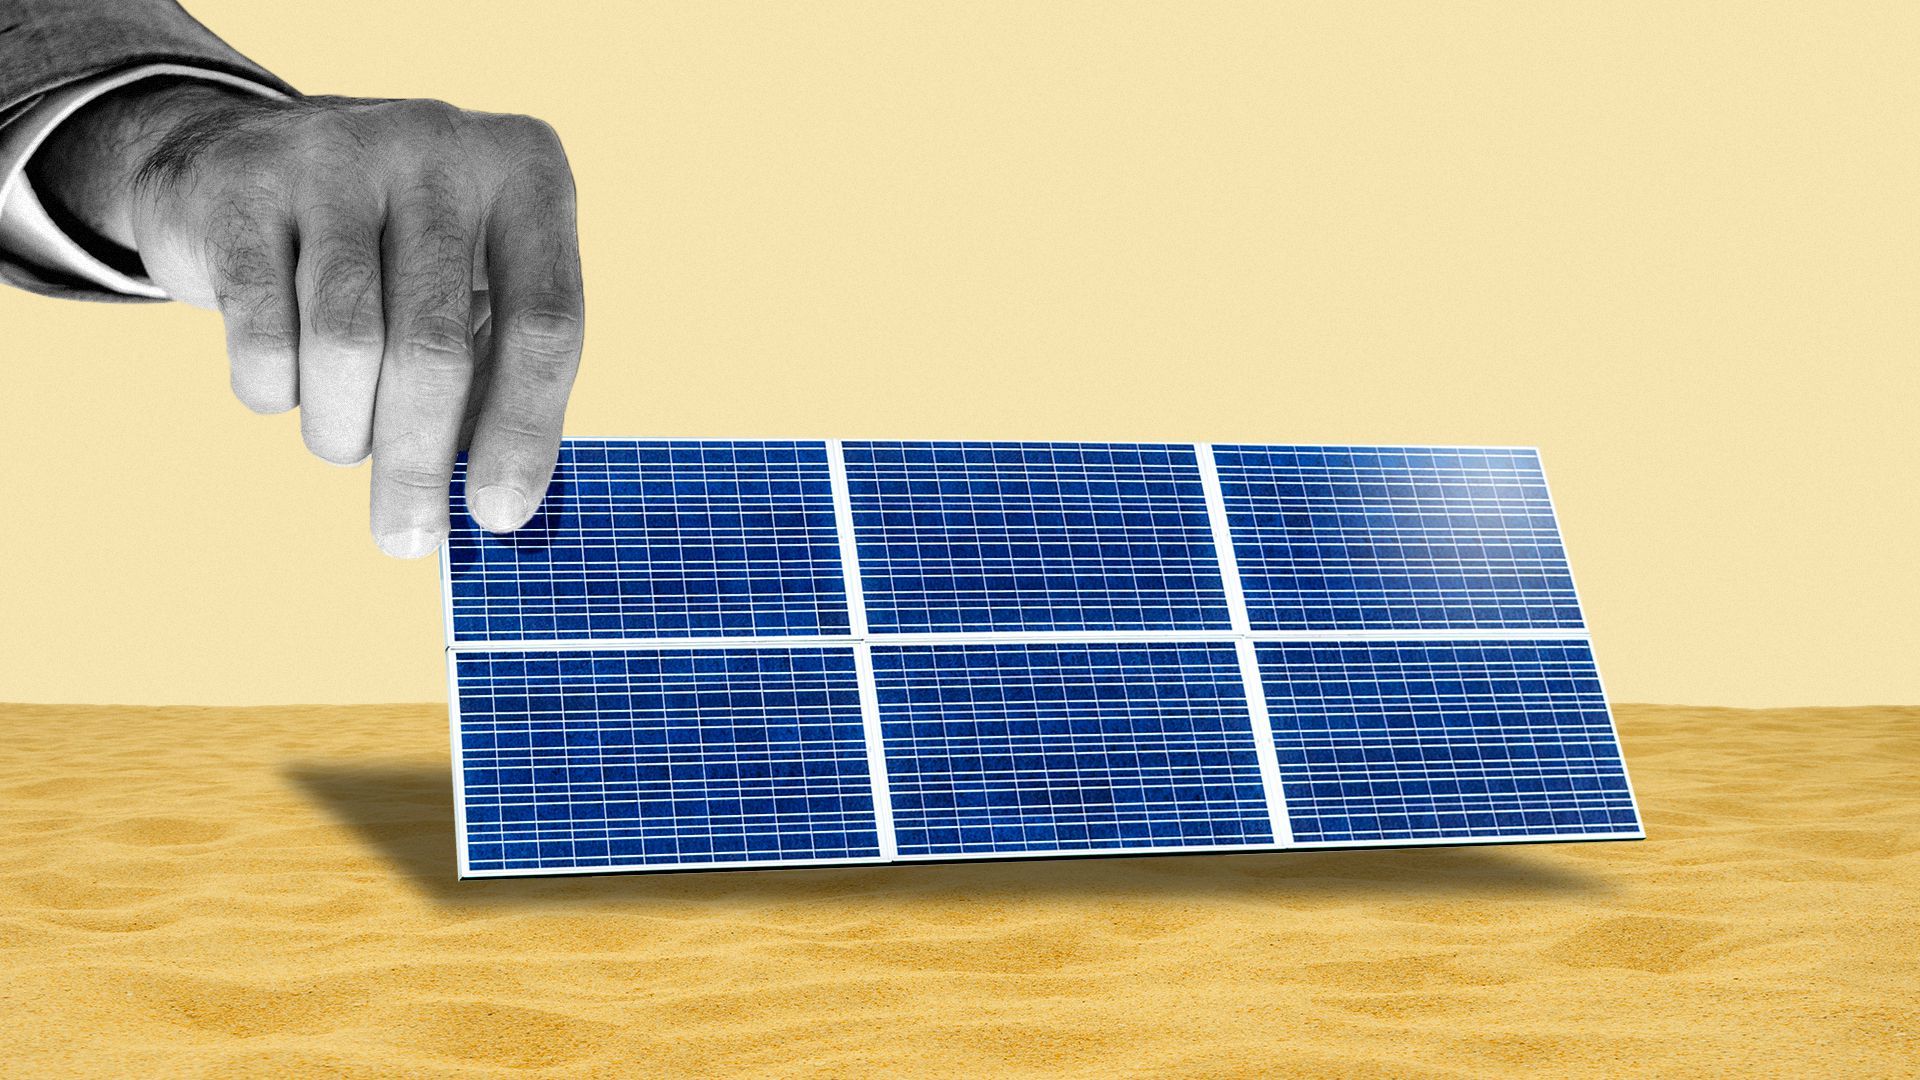 fugl arabisk Legitim Israel, Jordan and UAE to sign deal for huge solar farm - Axios